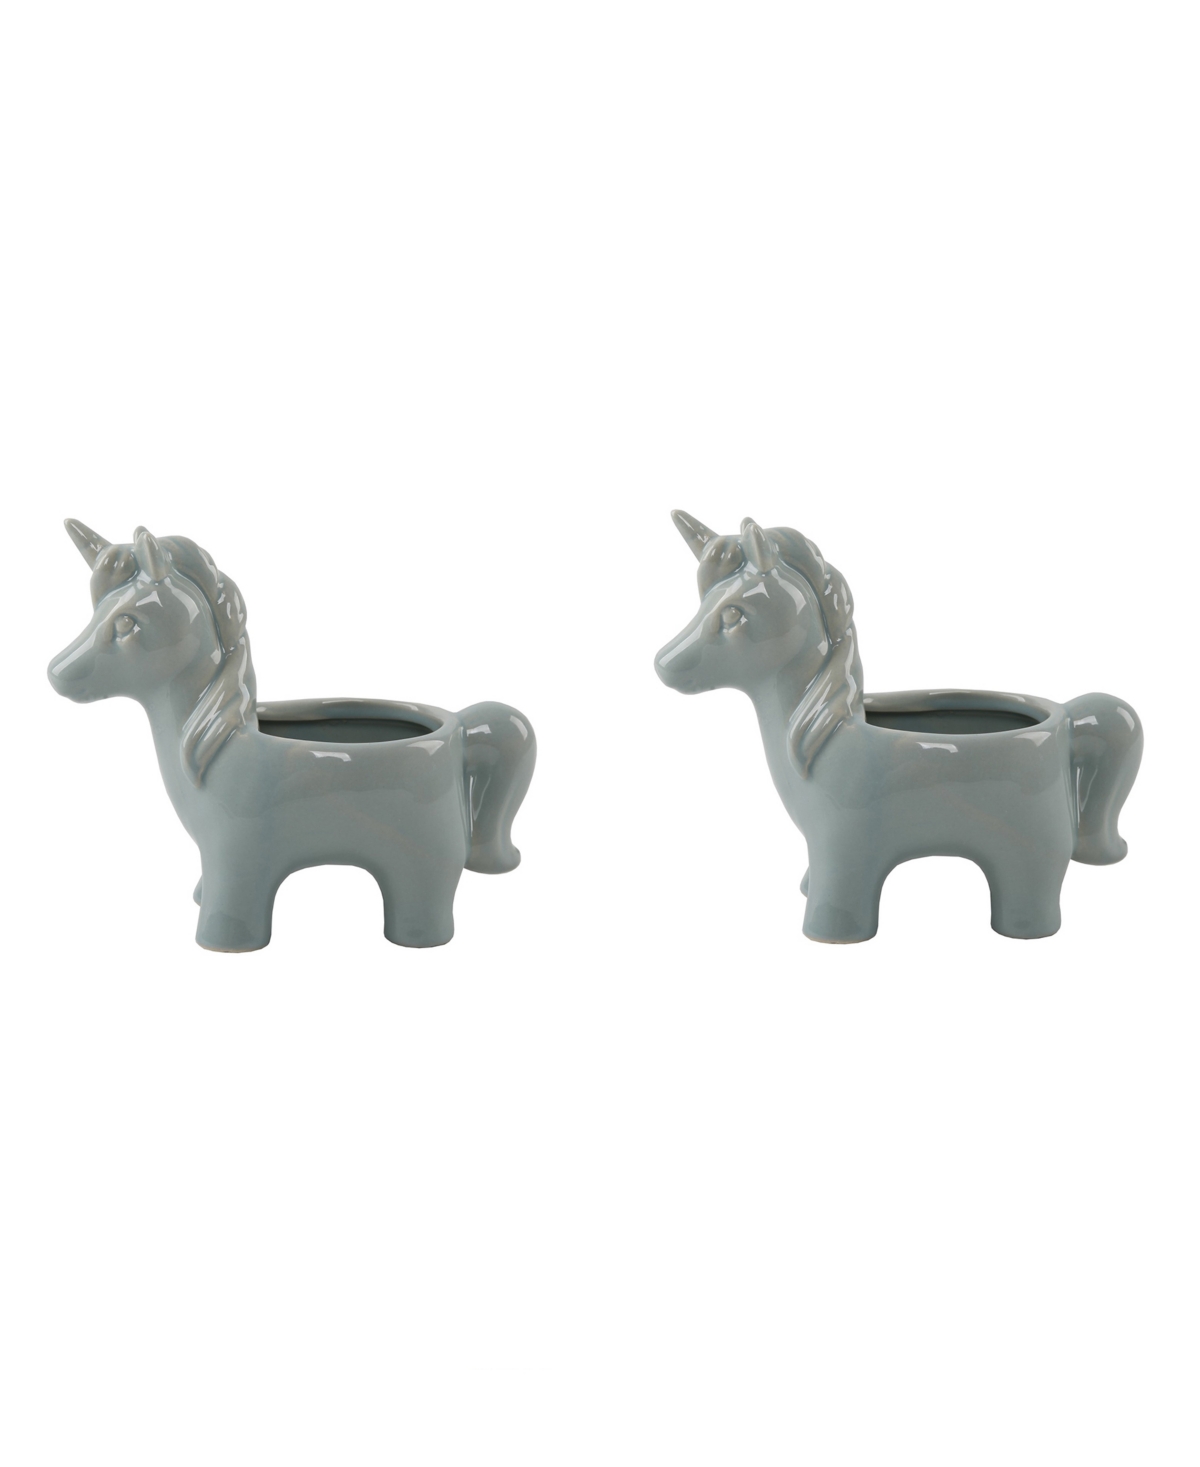 Ceramic Unicorn Planter Pot, Set of 2 - Teal